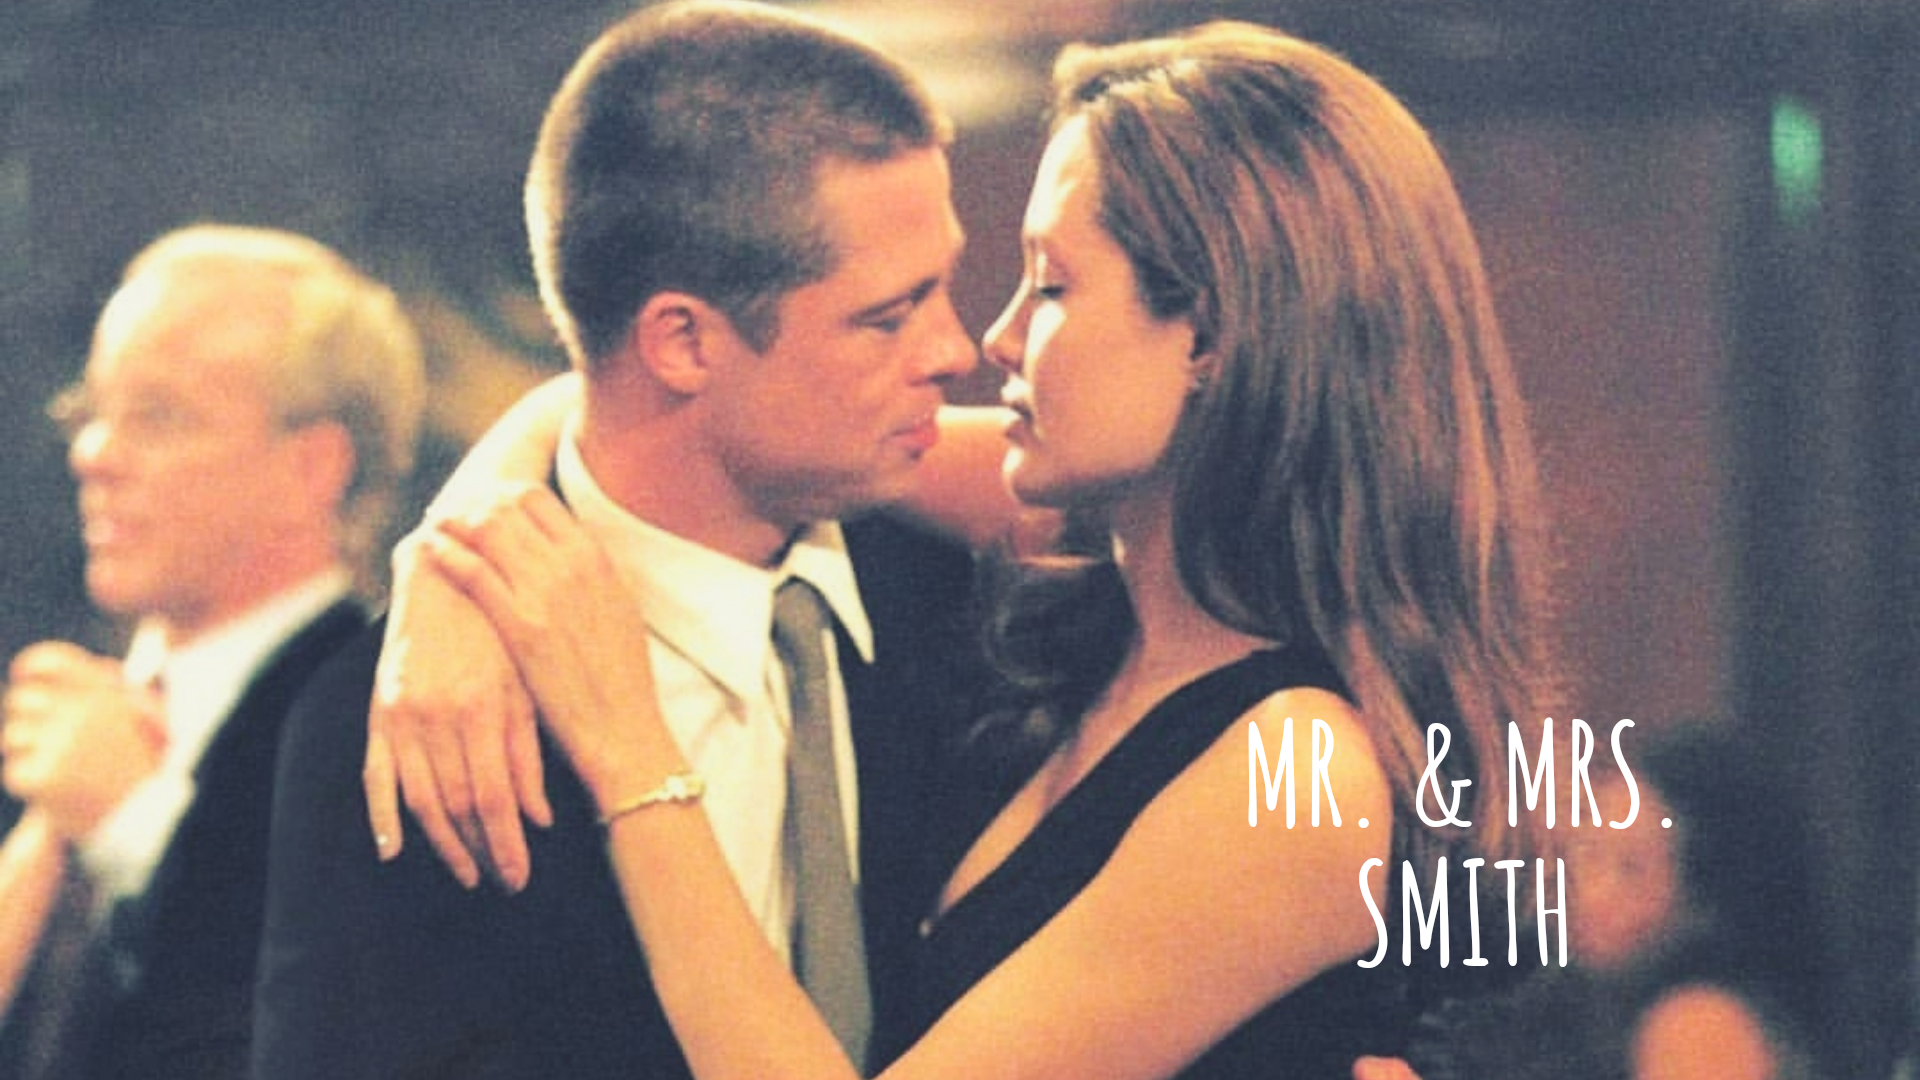 Mr.&Mrs. スミス(2005)